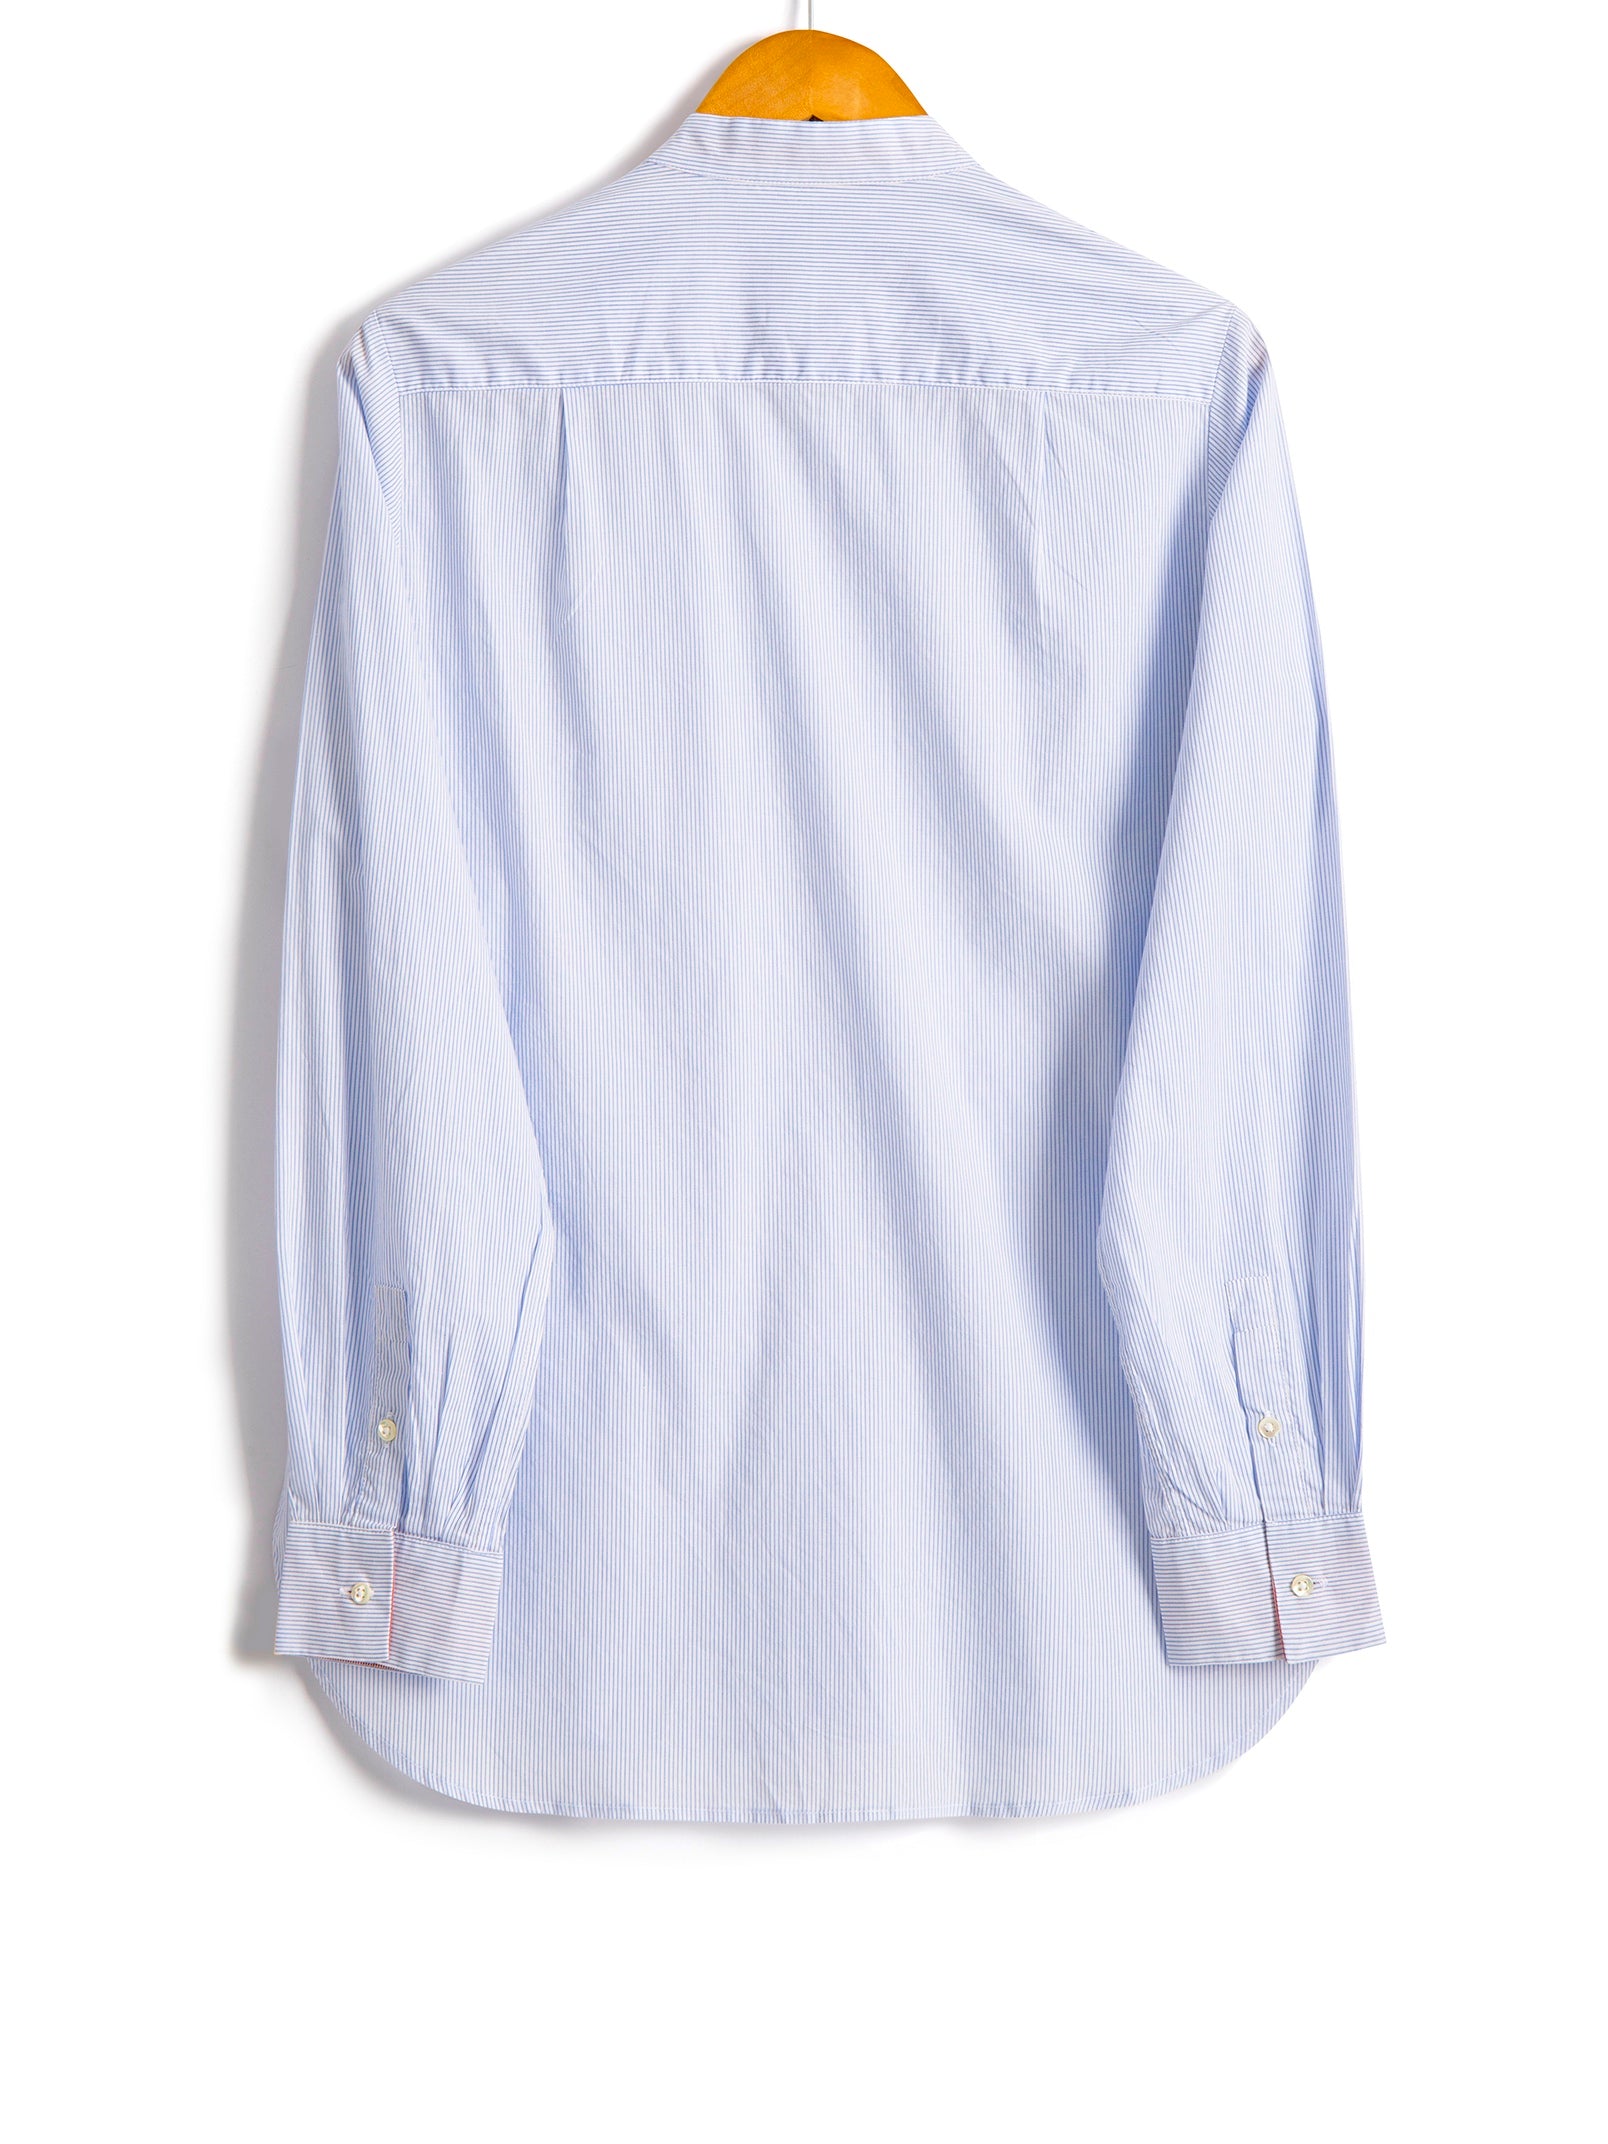 Bib Shirt, Fine Cotton Stripe, Shirt, Hickman & Bousfield - Hickman & Bousfield, Safari and Travel Clothing